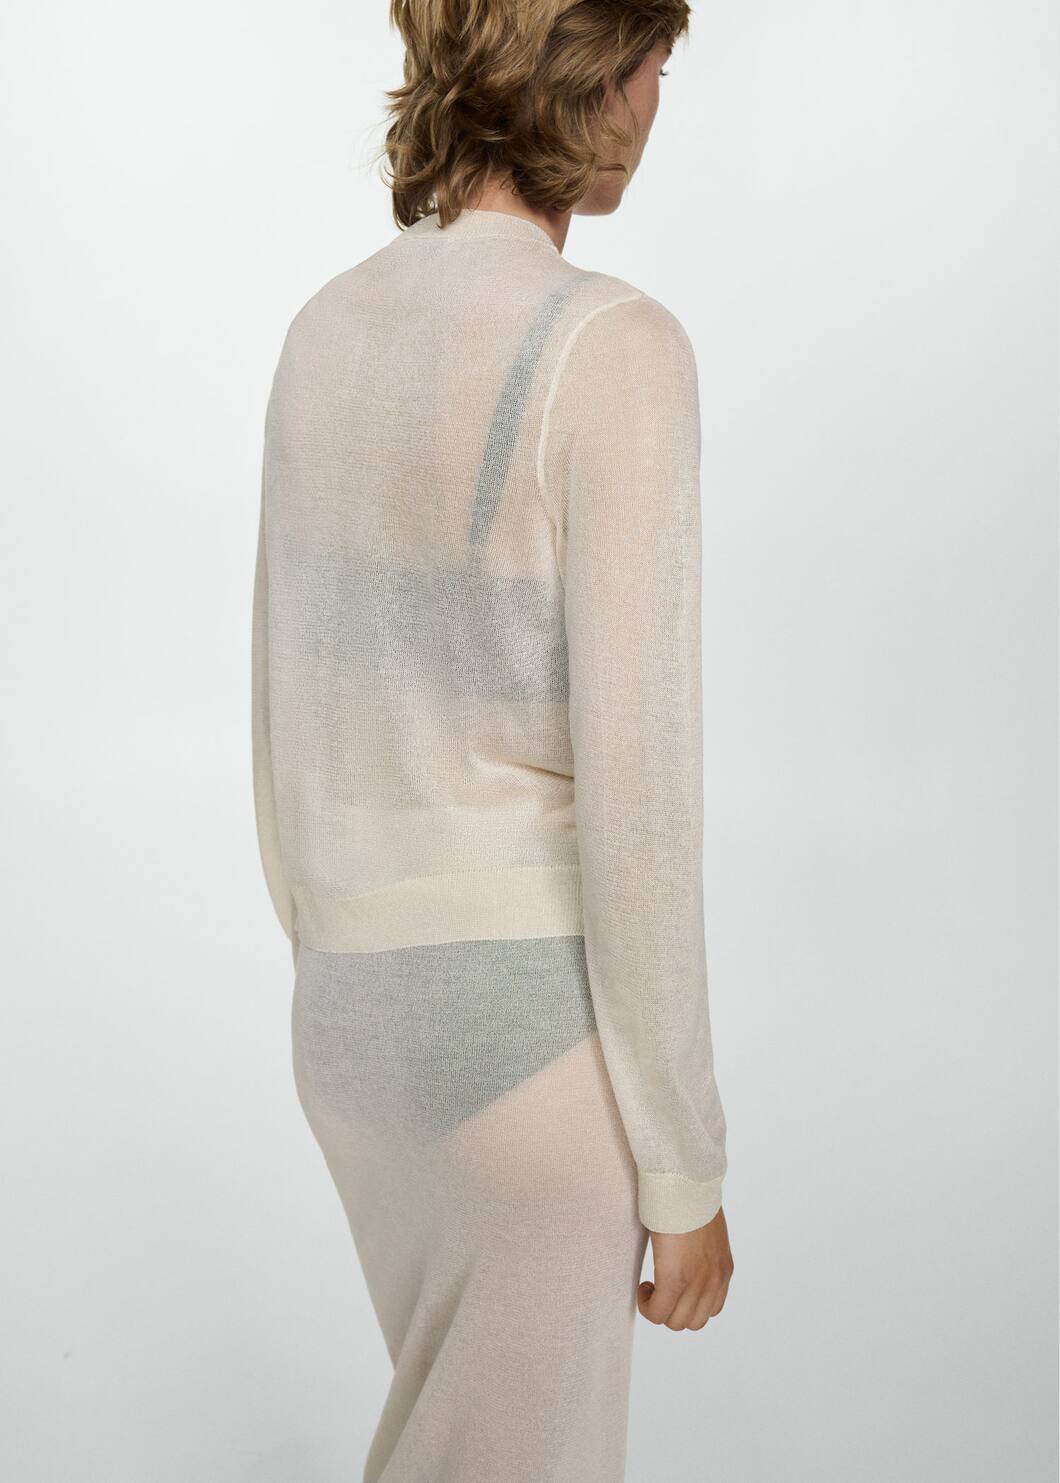 Semi transparent knitted cardigan